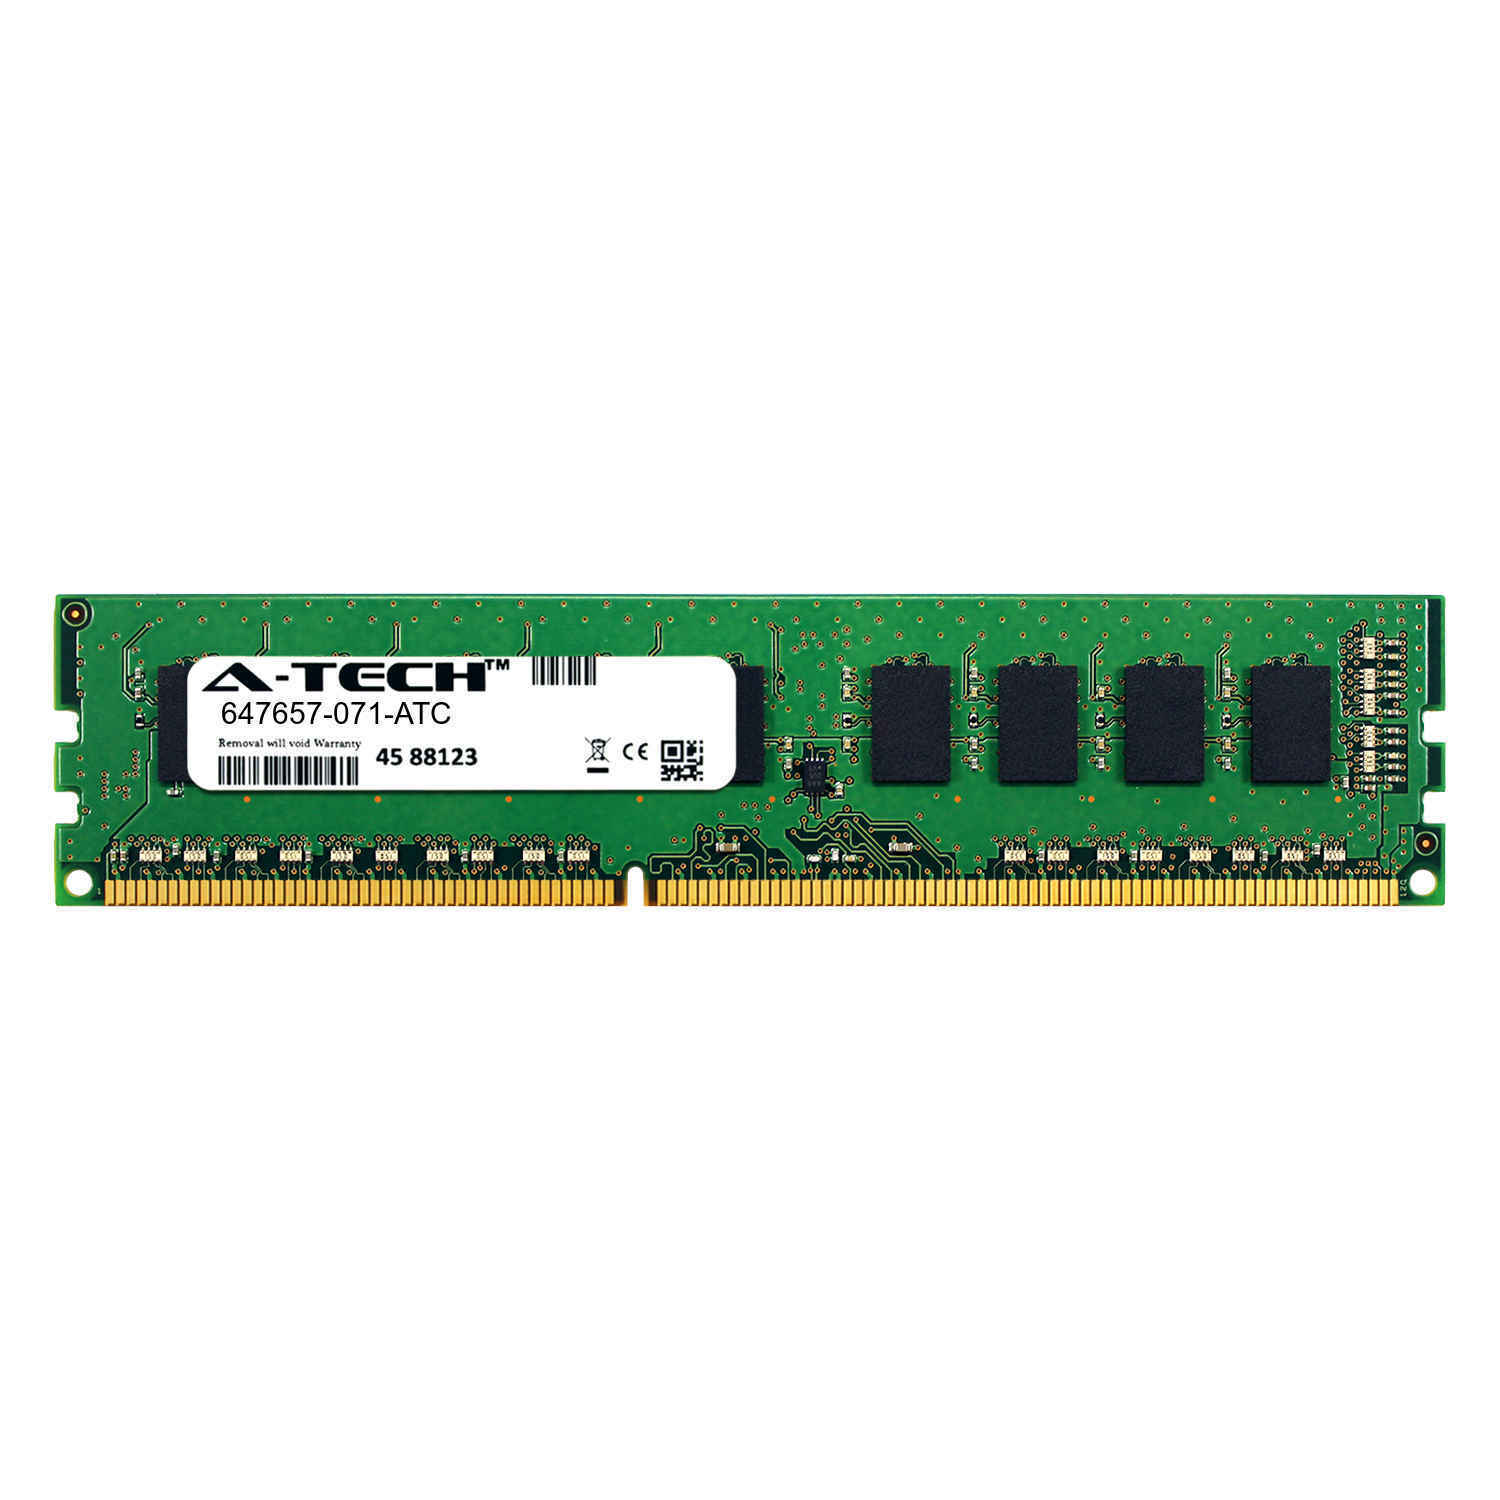 4GB DDR3 PC3-10600E ECC UDIMM (HP 647657-071 Equivalent) Server Memory RAM